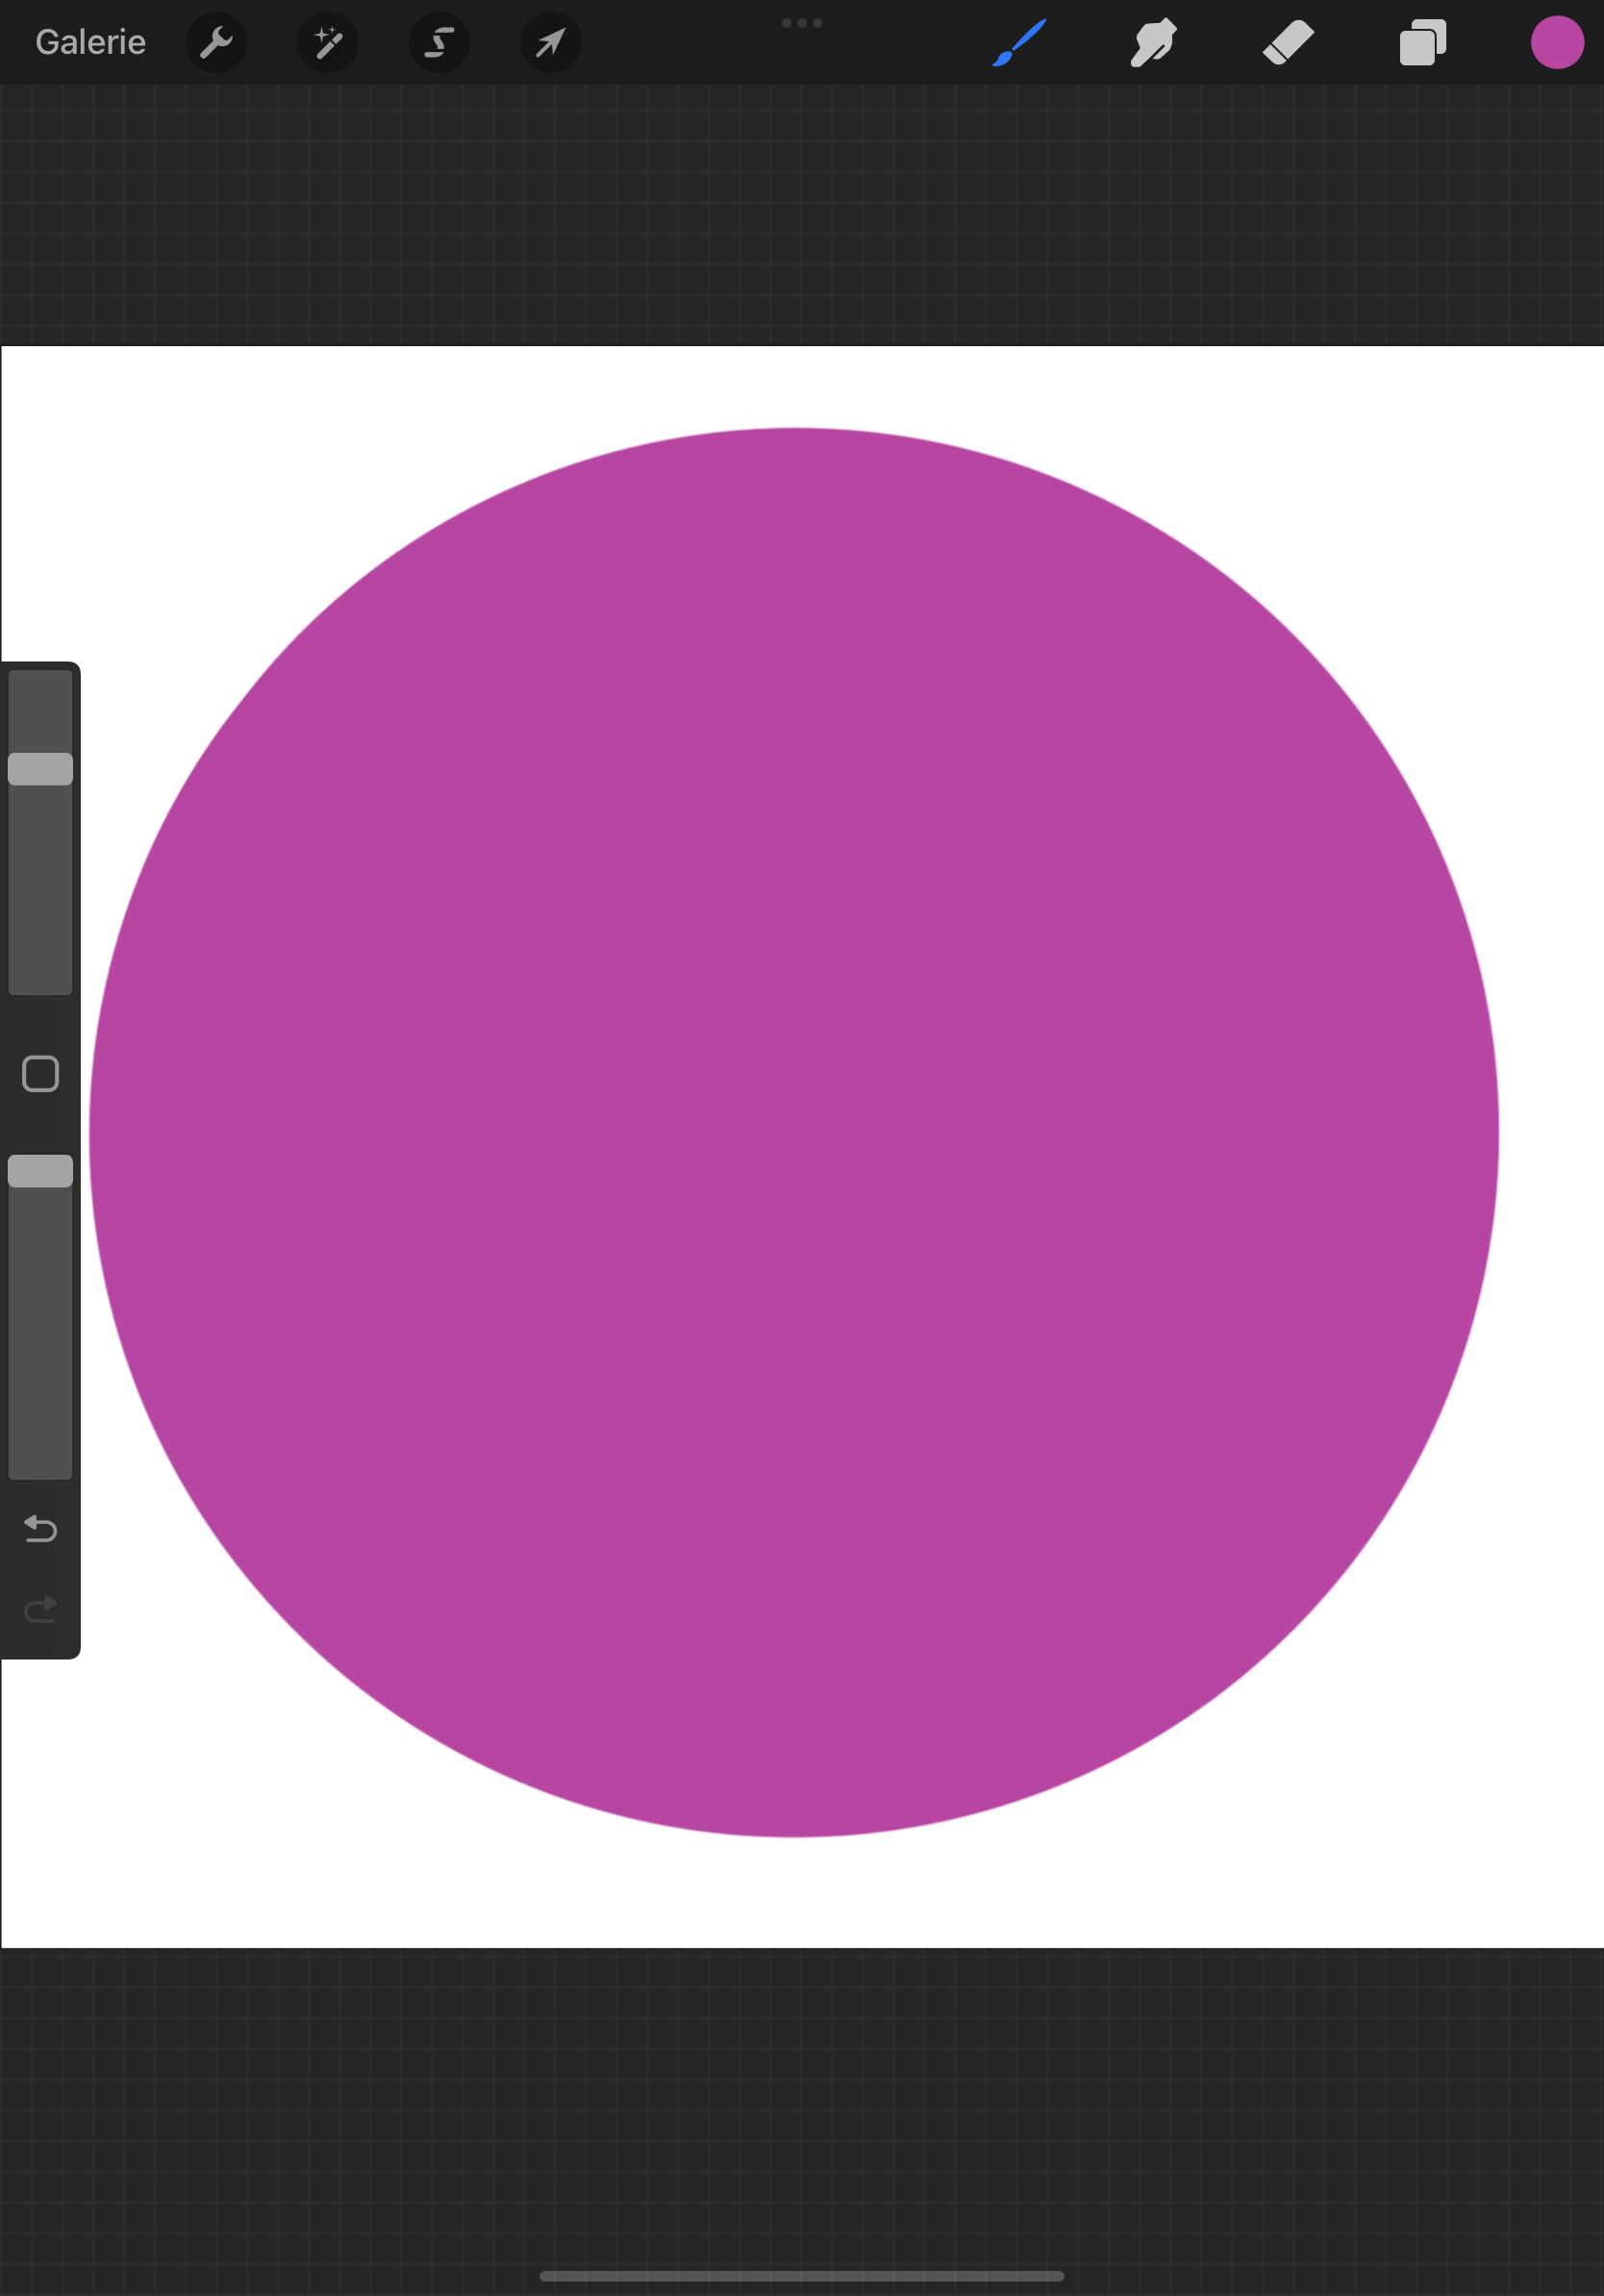 Pinker Kreis auf Ebene 1